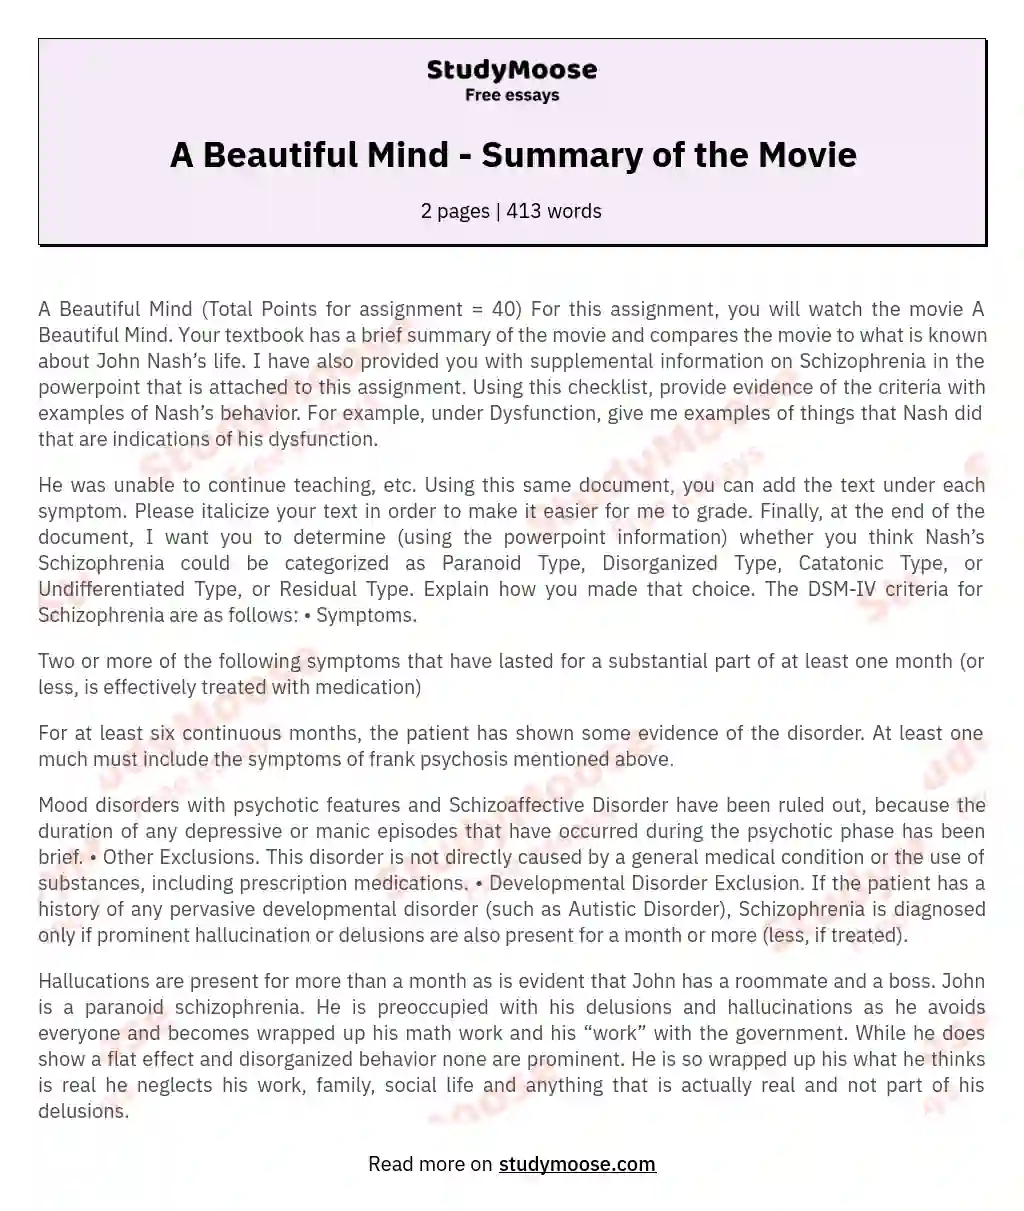 A Beautiful Mind - Summary of the Movie